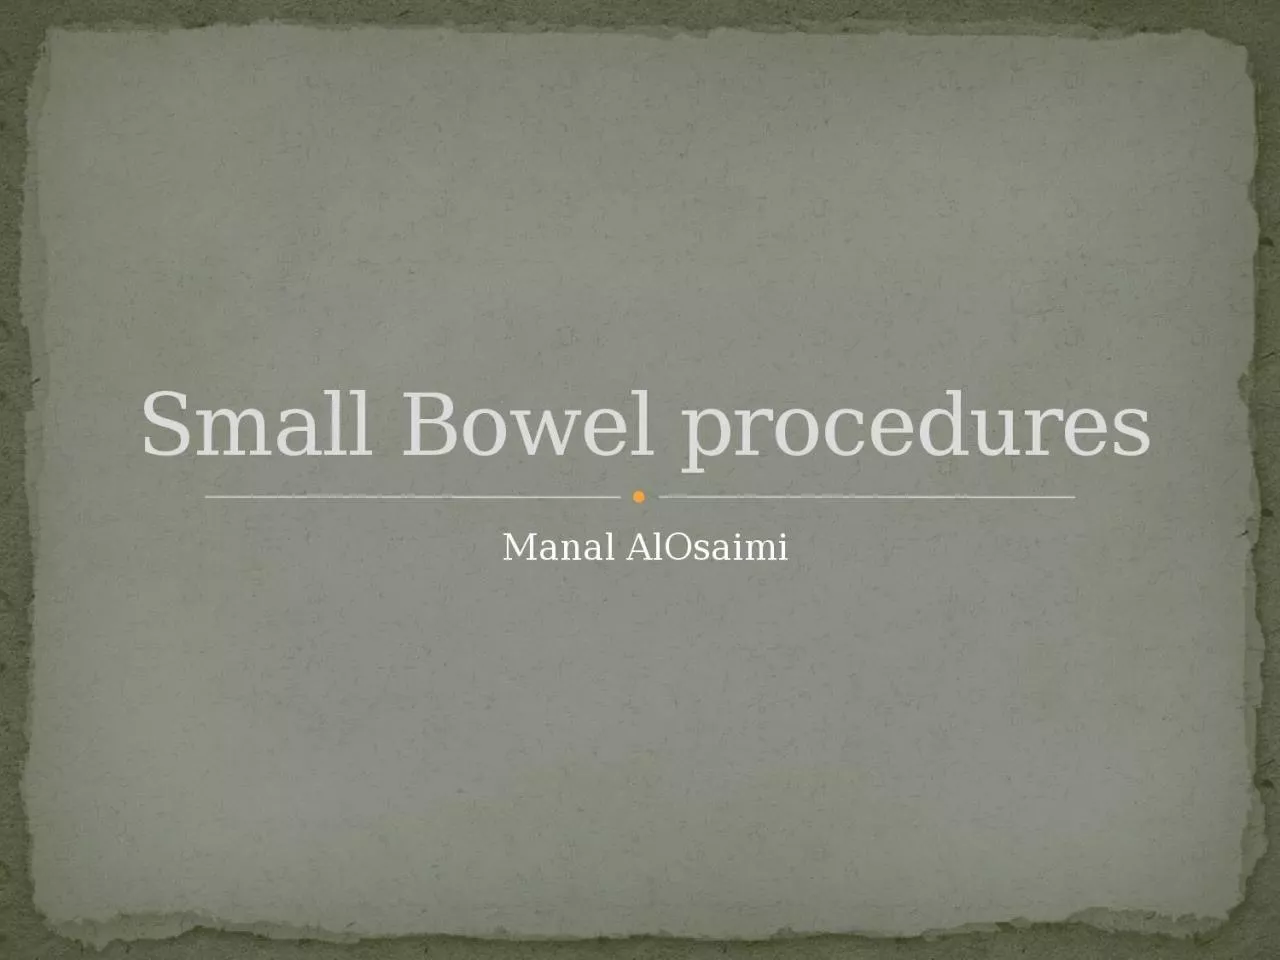 Manal  AlOsaimi Small Bowel procedures